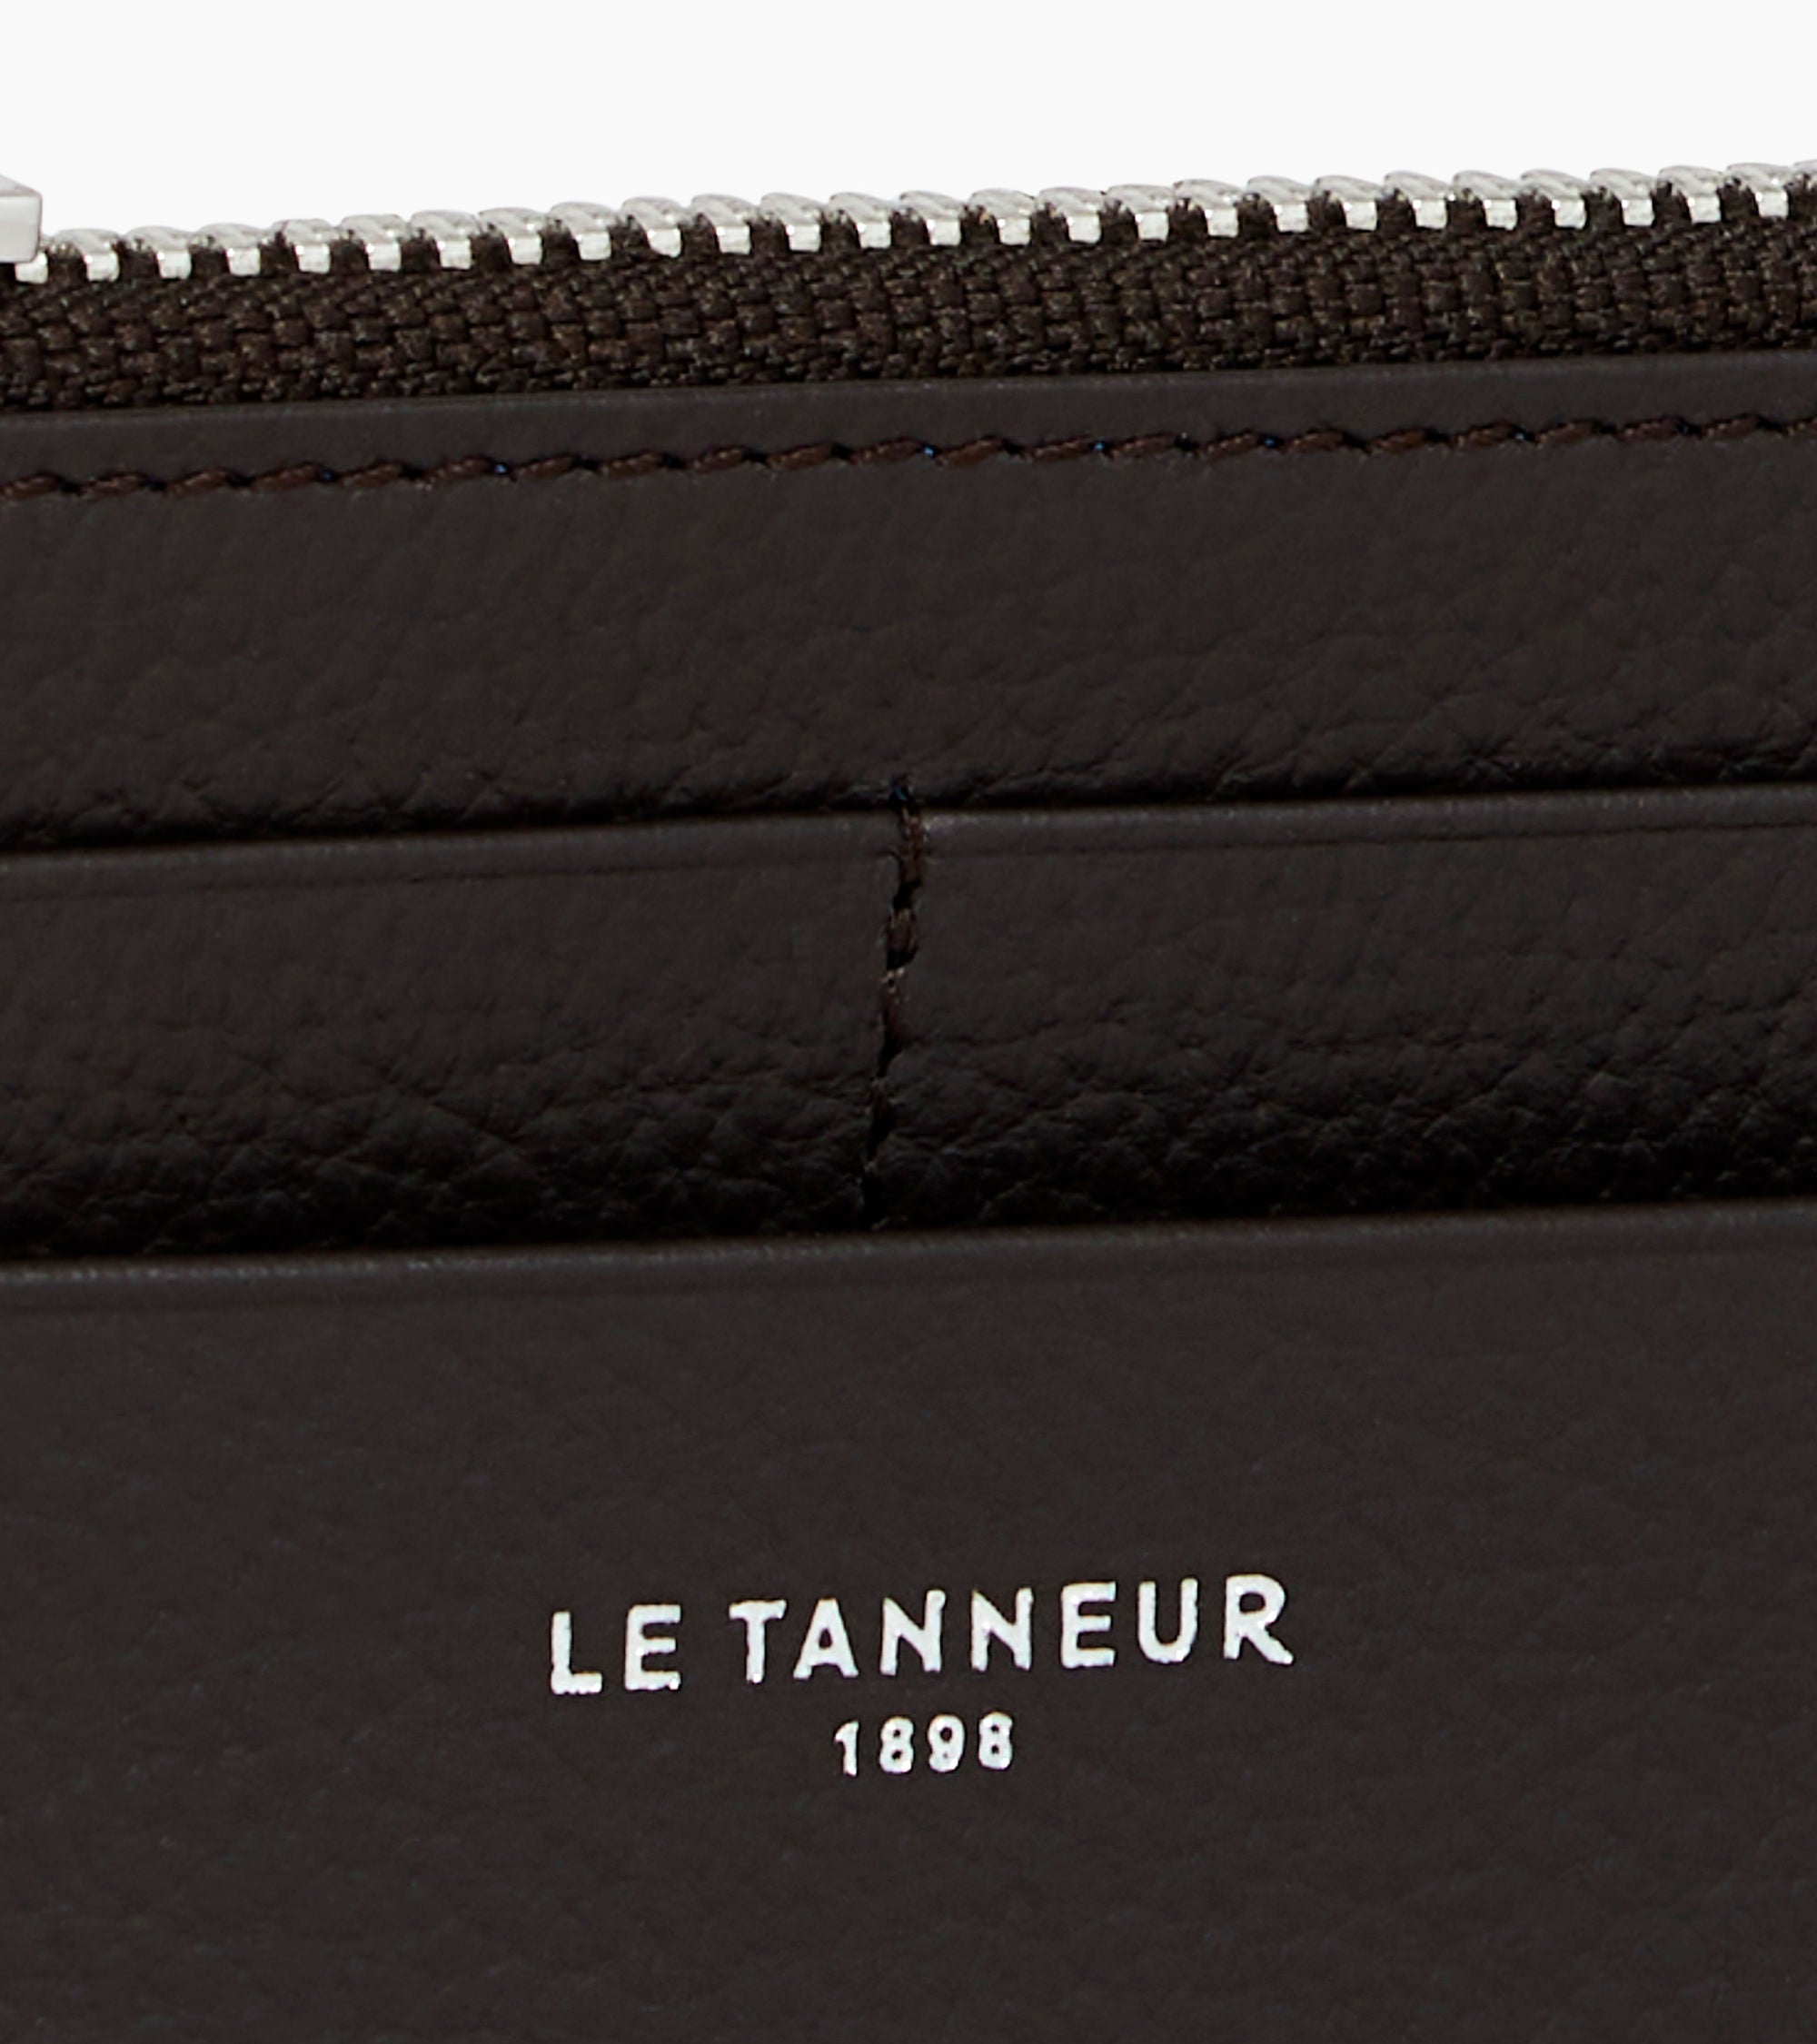 Emile medium-sized, zipped card case in pebbled leather